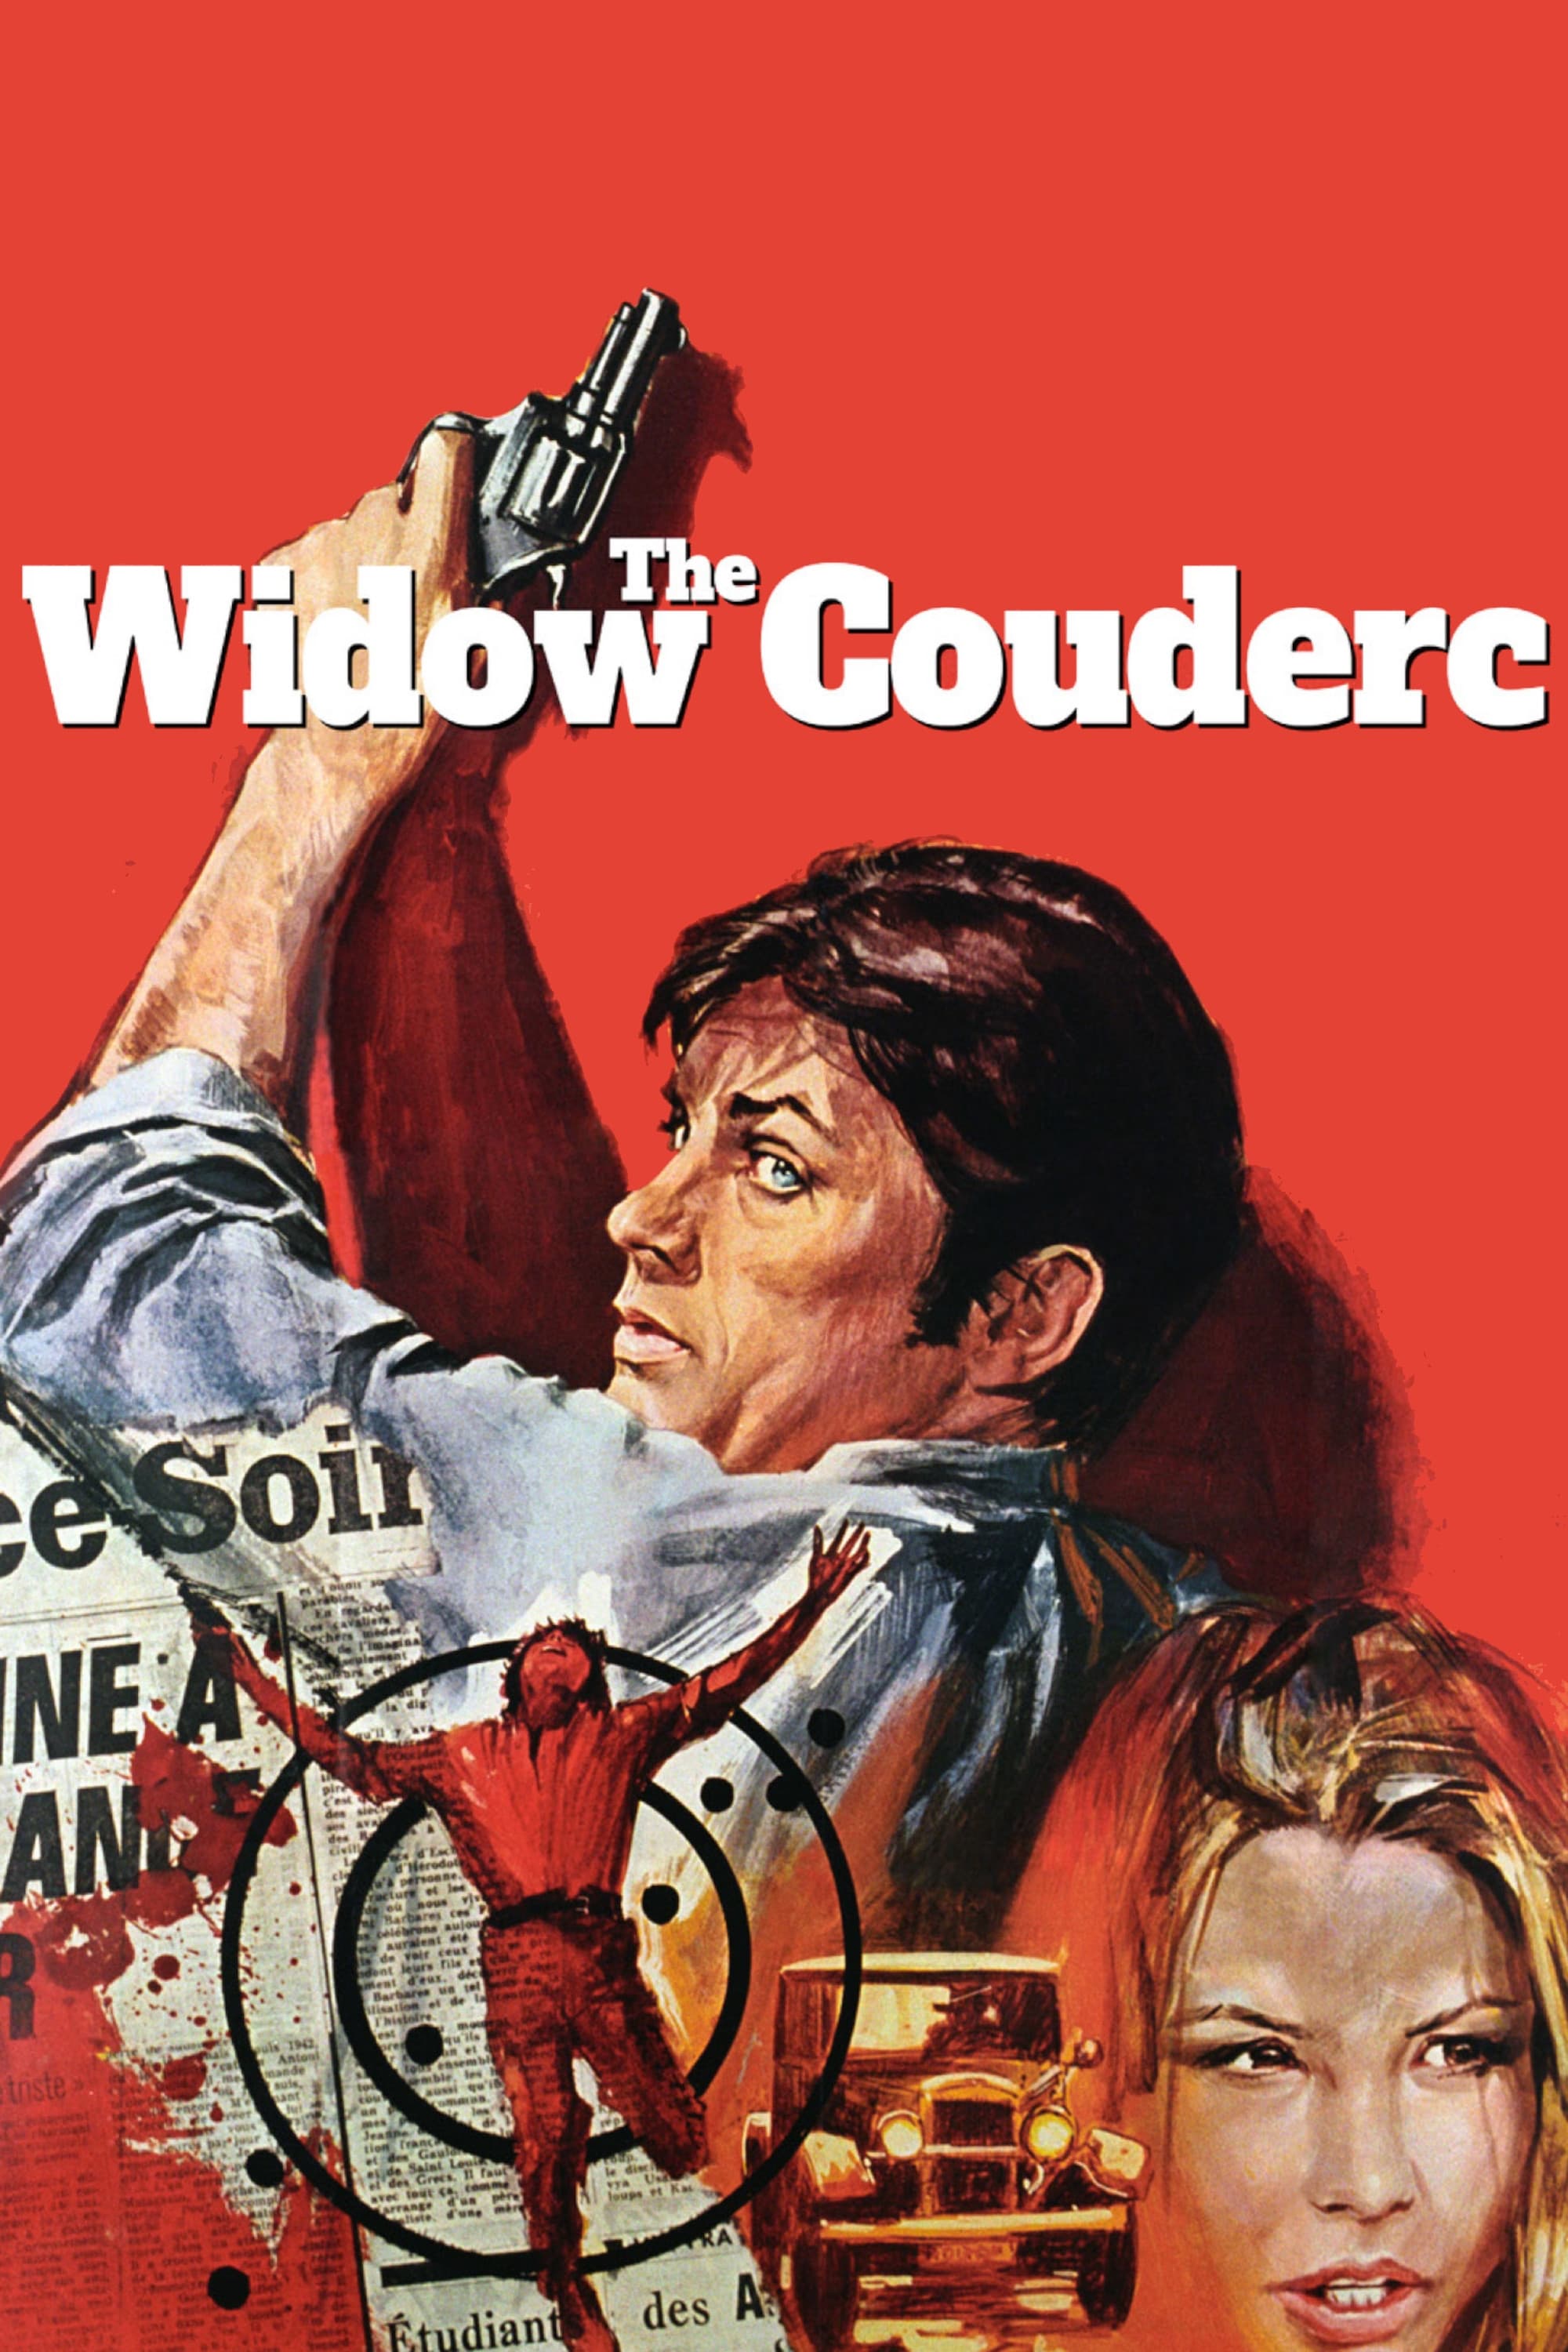 The Widow Couderc (1971)